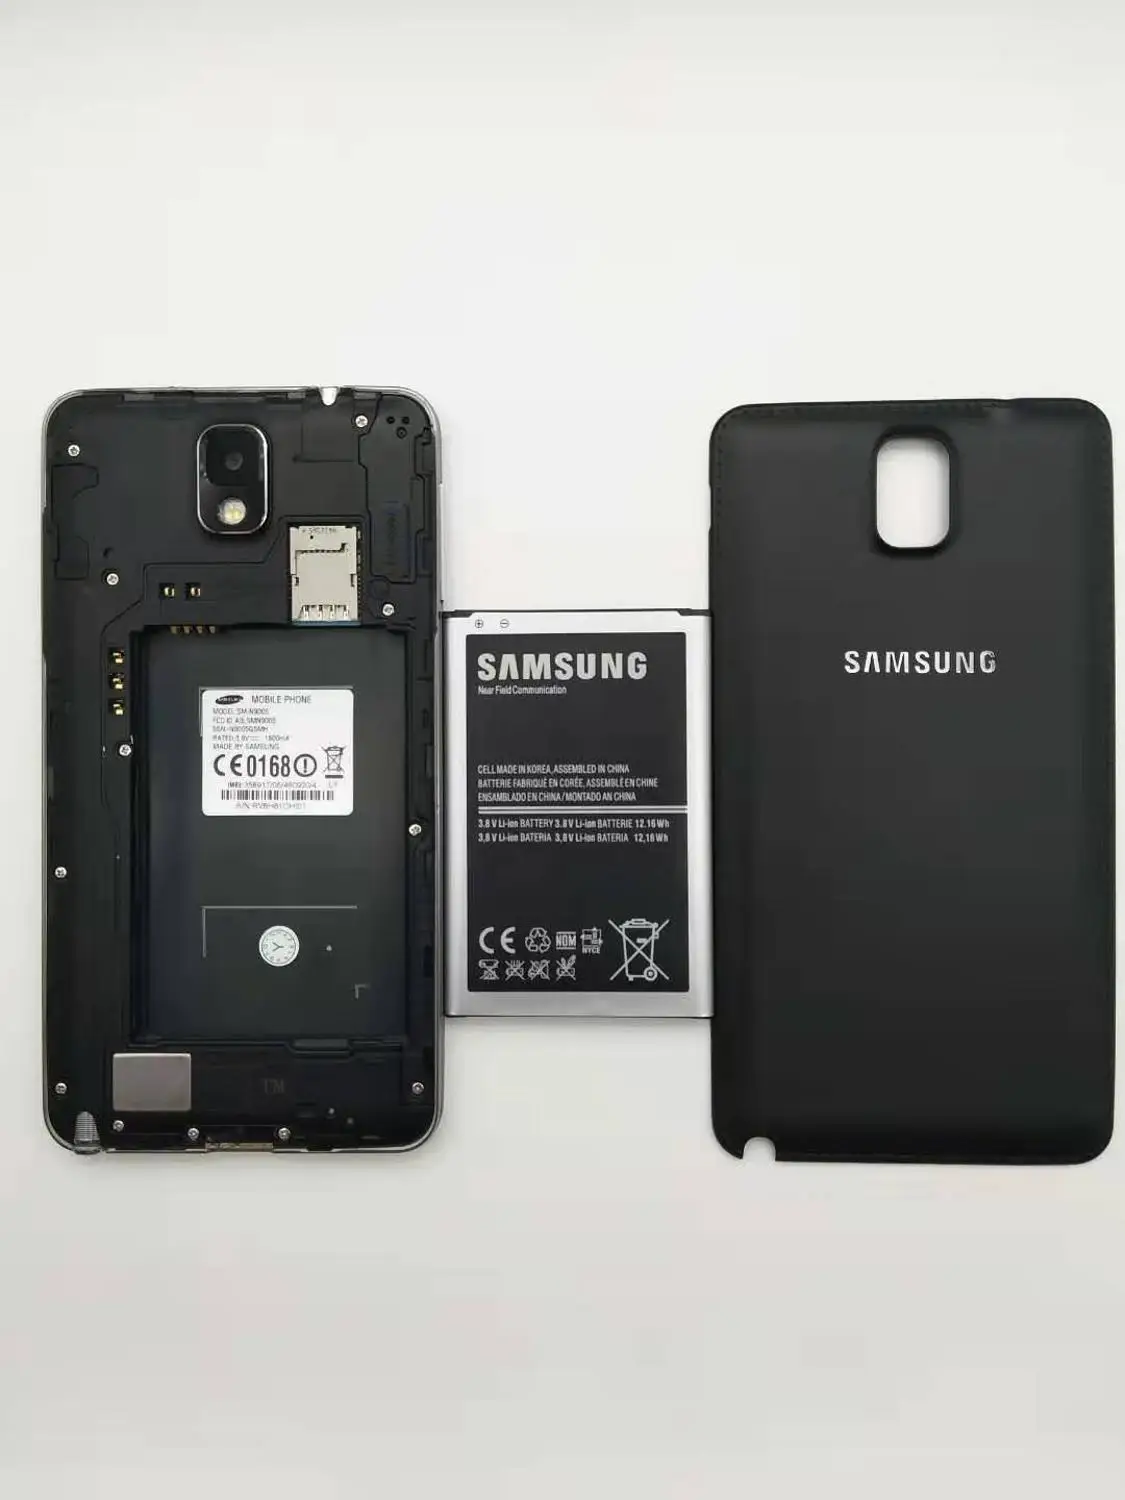 

Samsung Note 3 Refurbished-Original Samsung Galaxy Note 3 N900 N9005 Phone Quad Core 5.5" 8MP 3G WIFI GPS note 3 cell phone